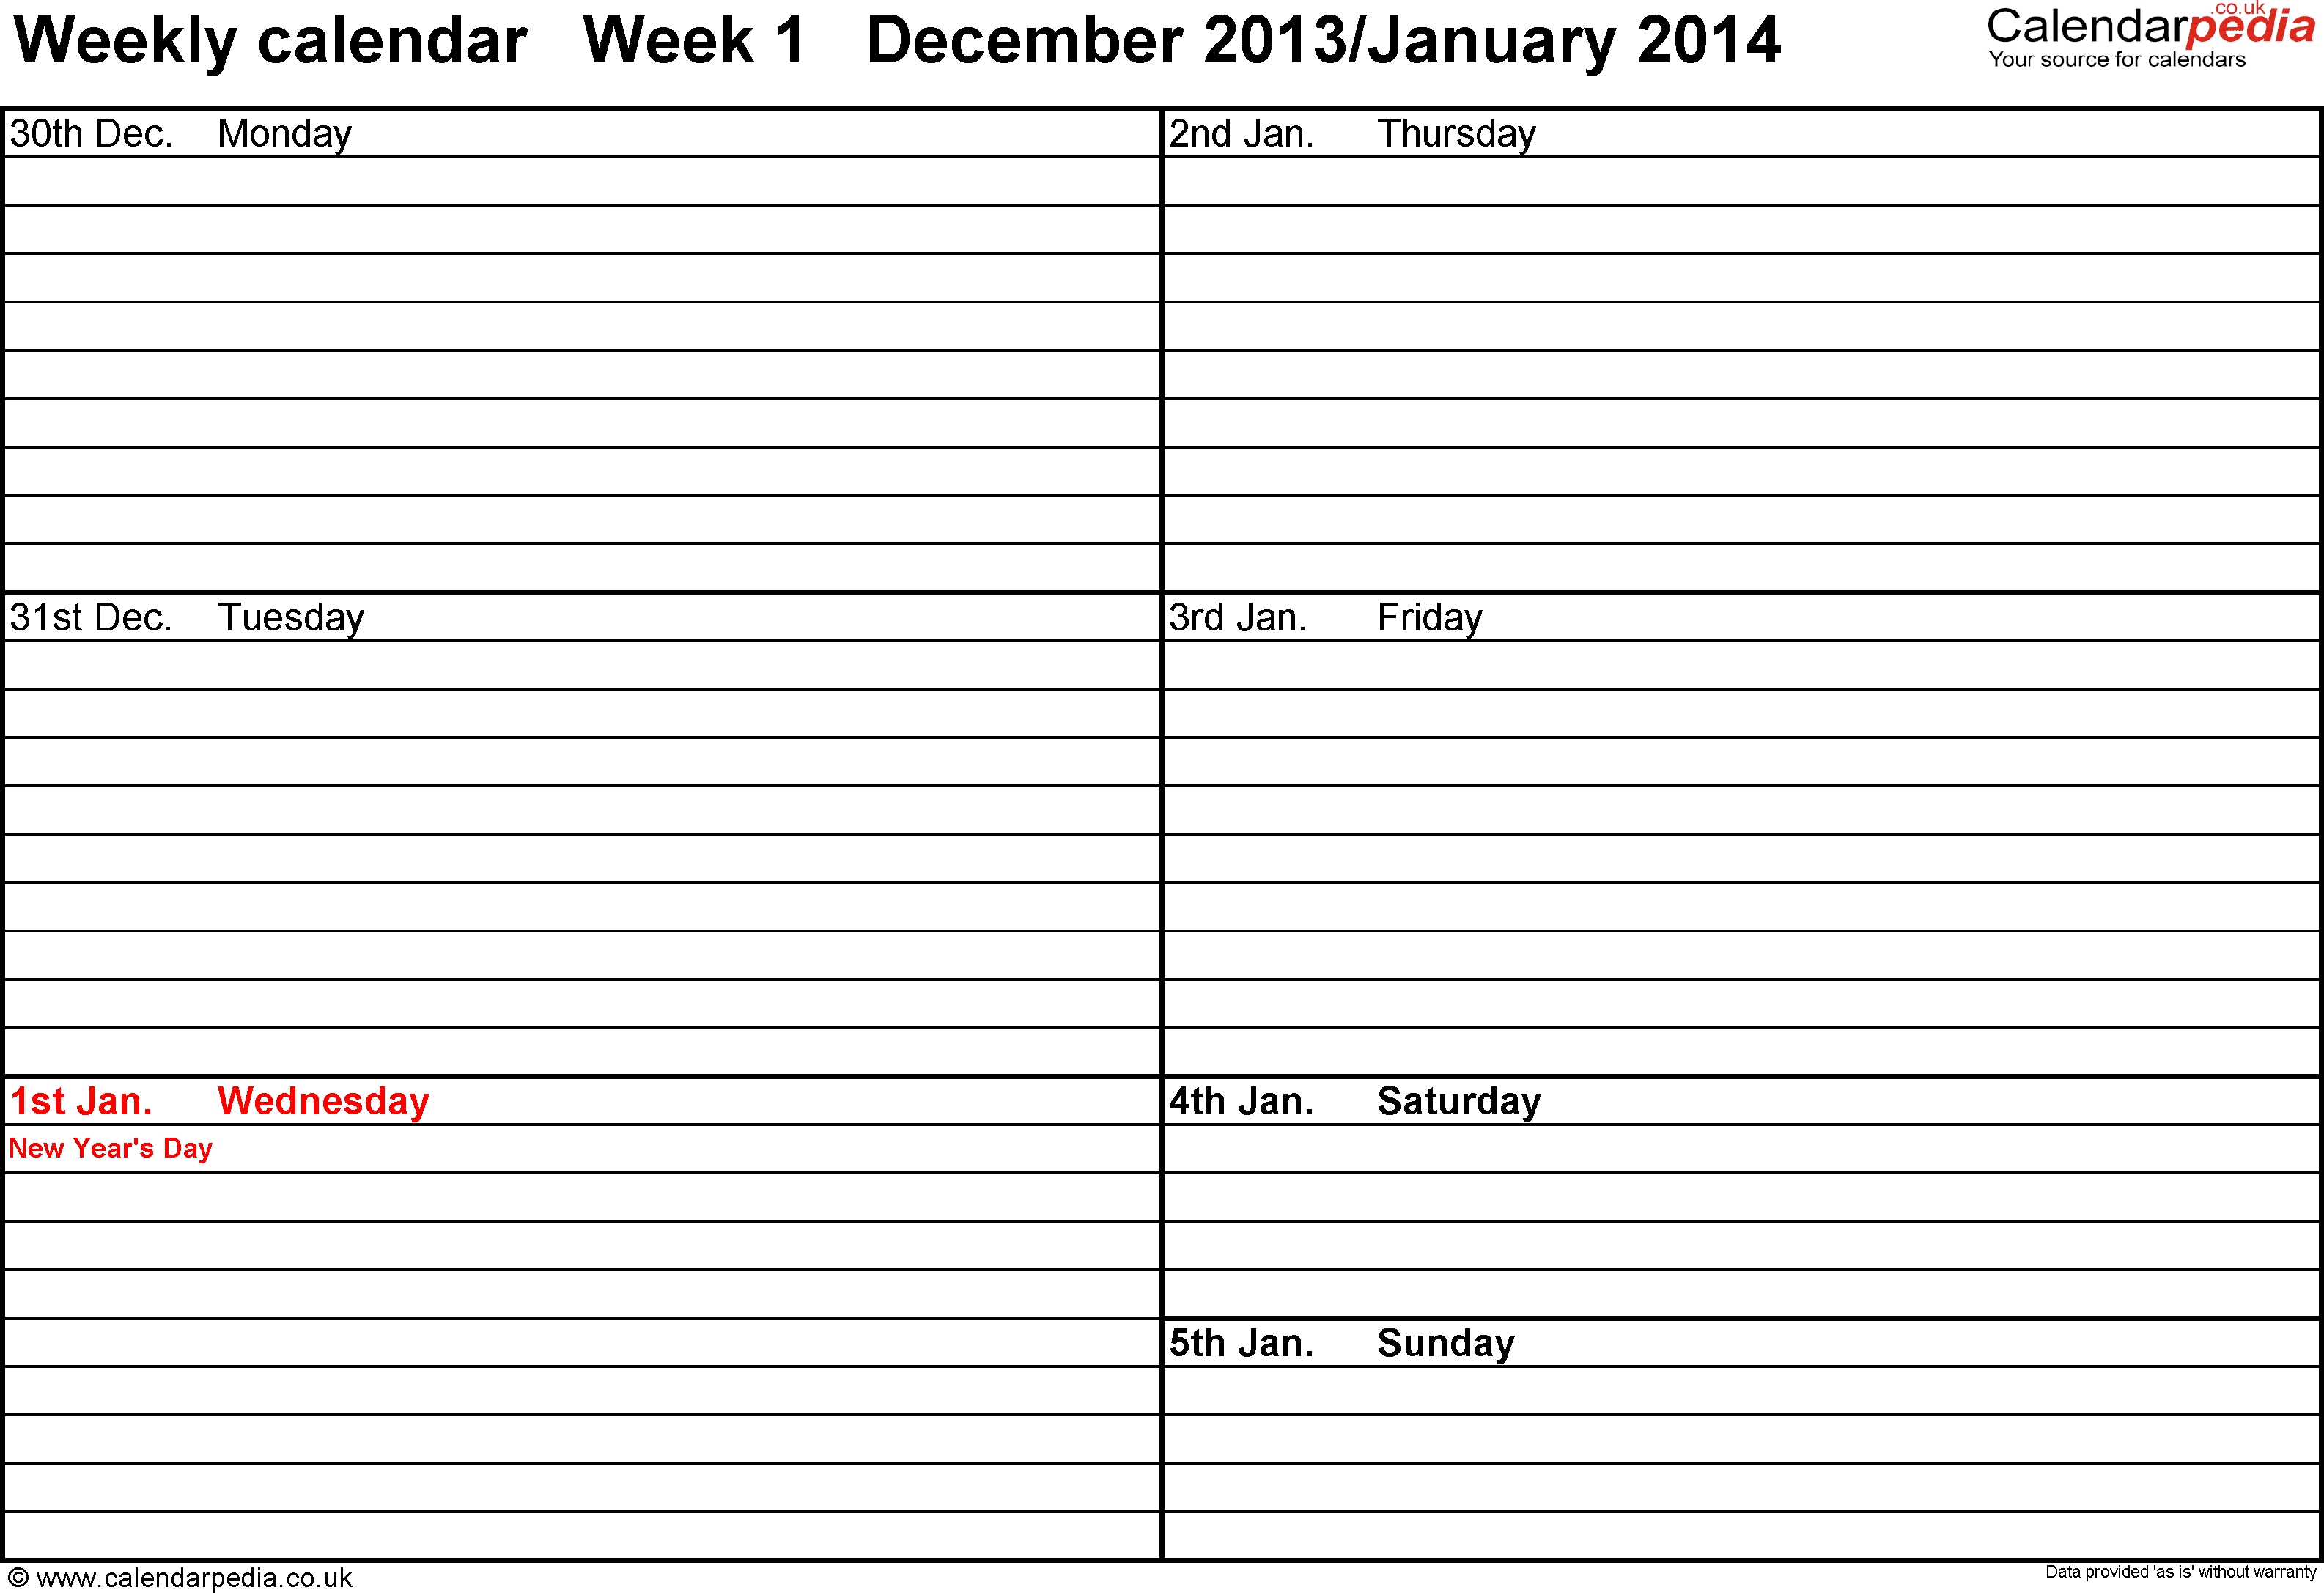 One Week Calendar Template Word - Wallofcoins.wallofcoins.tk throughout Free Day To Day Calendar